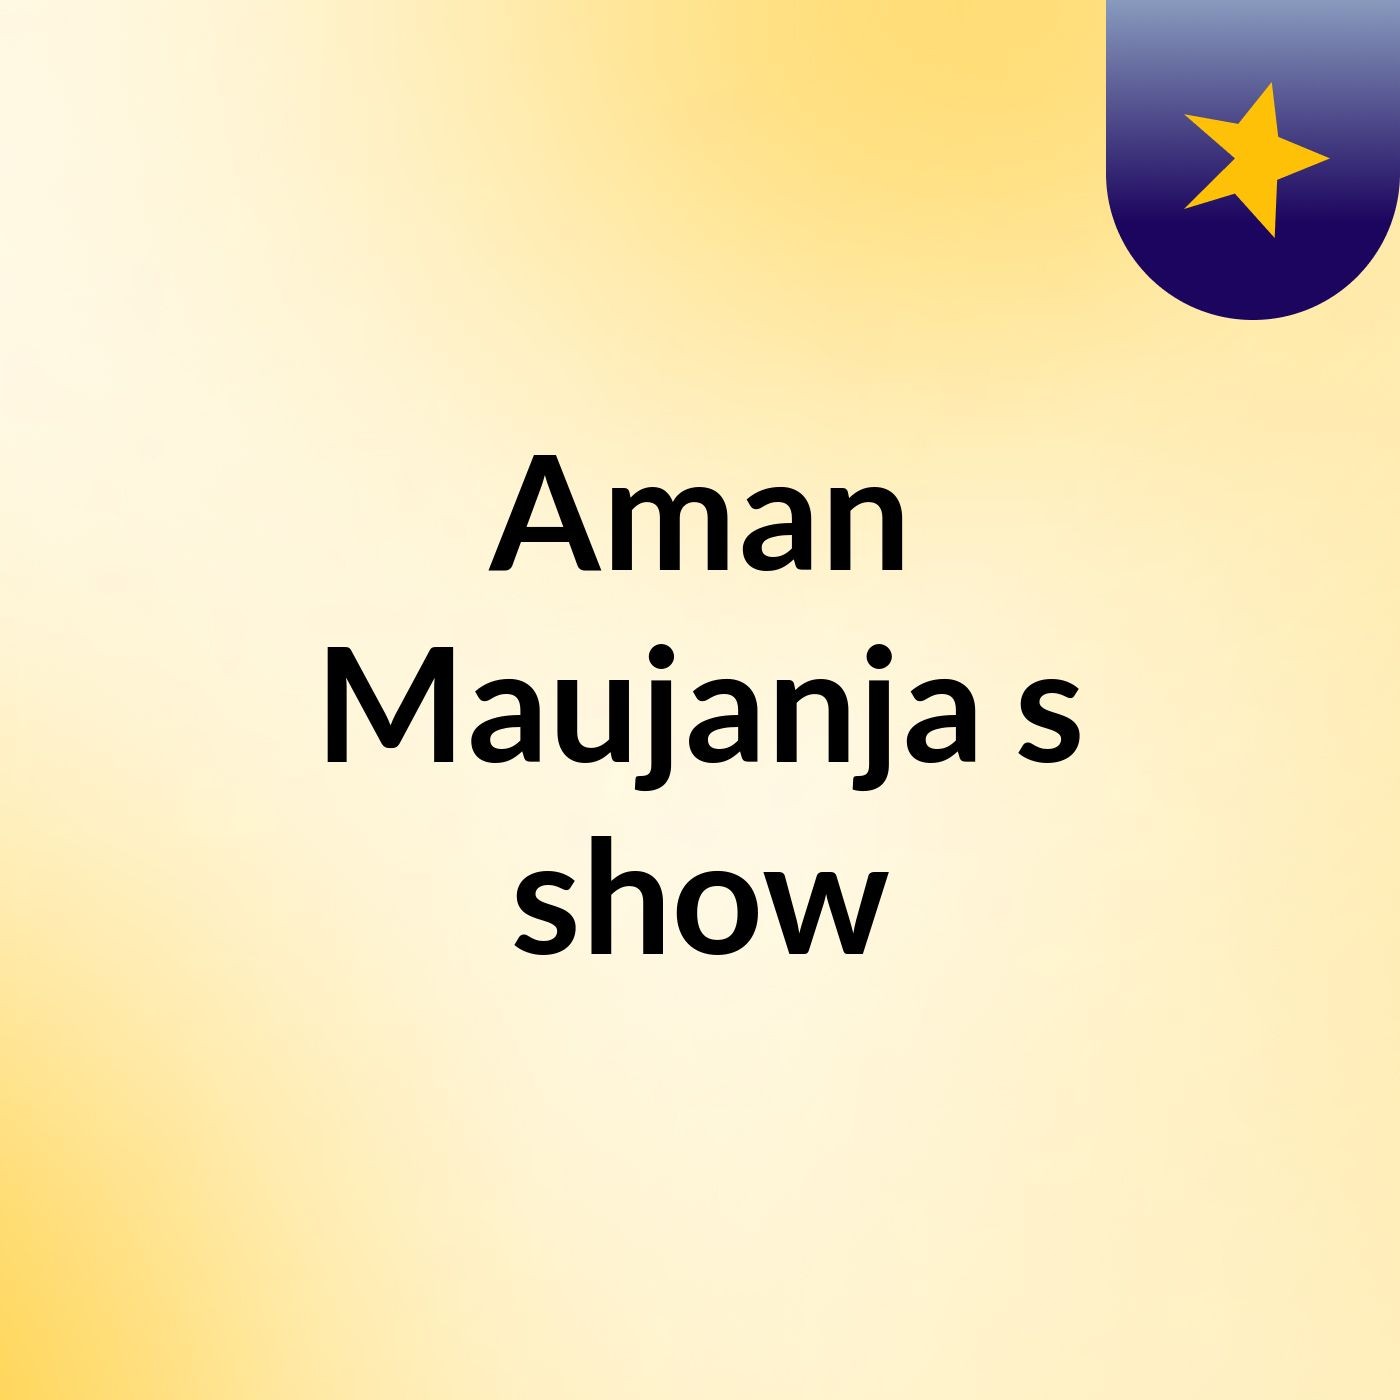 Aman Maujanja's show